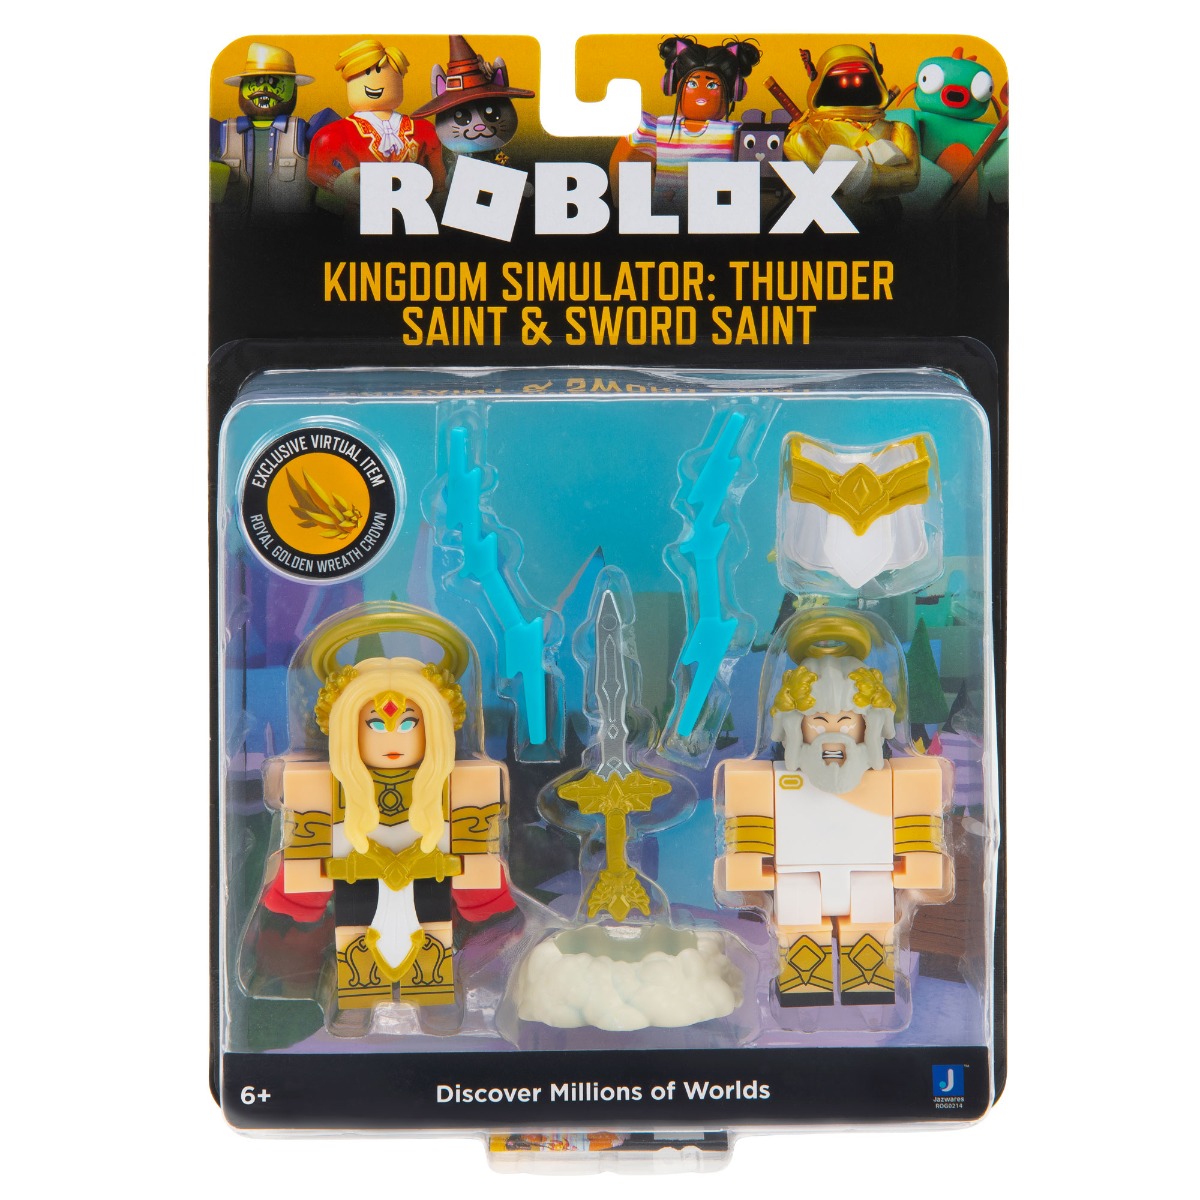 Roblox celebrity pachet cu 2 figurine (kingdom simulator: thunder saint & sword saint) s8